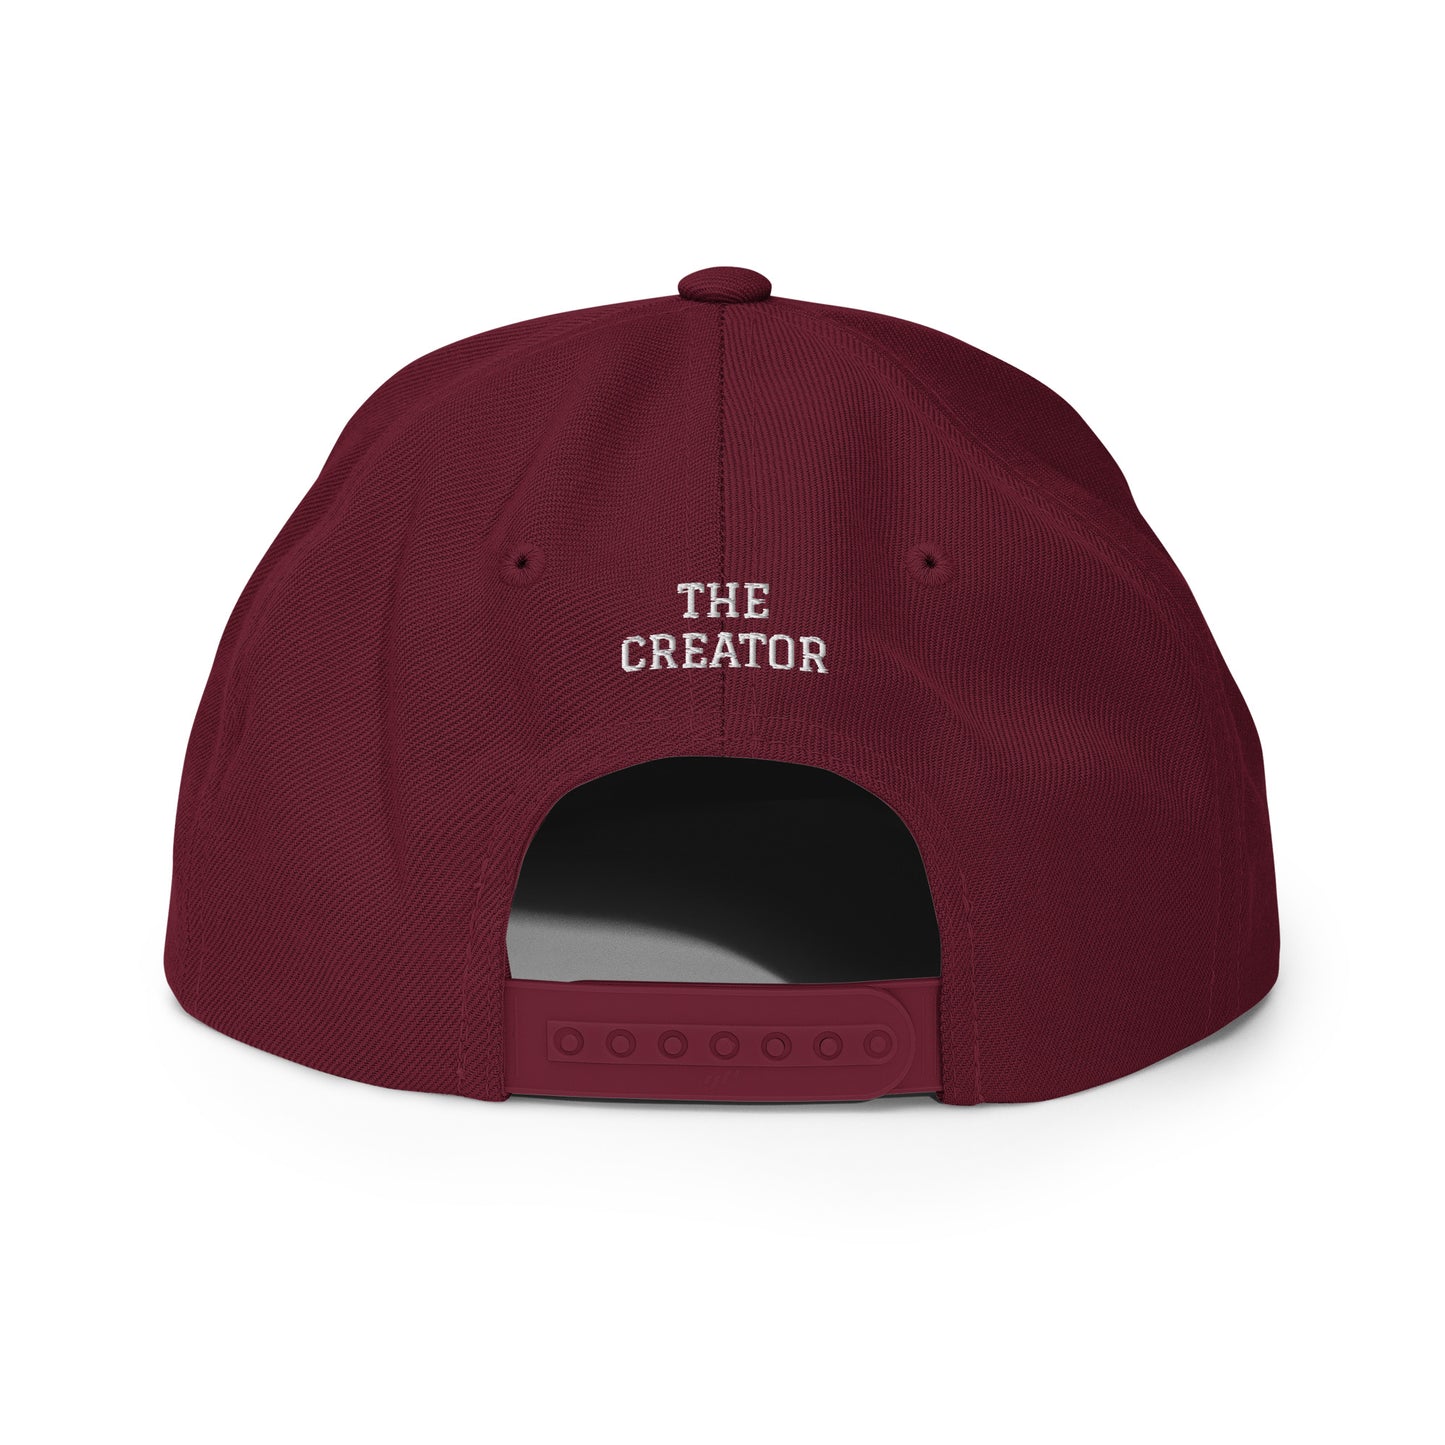 THE CREATOR MAROON Snapback Hat